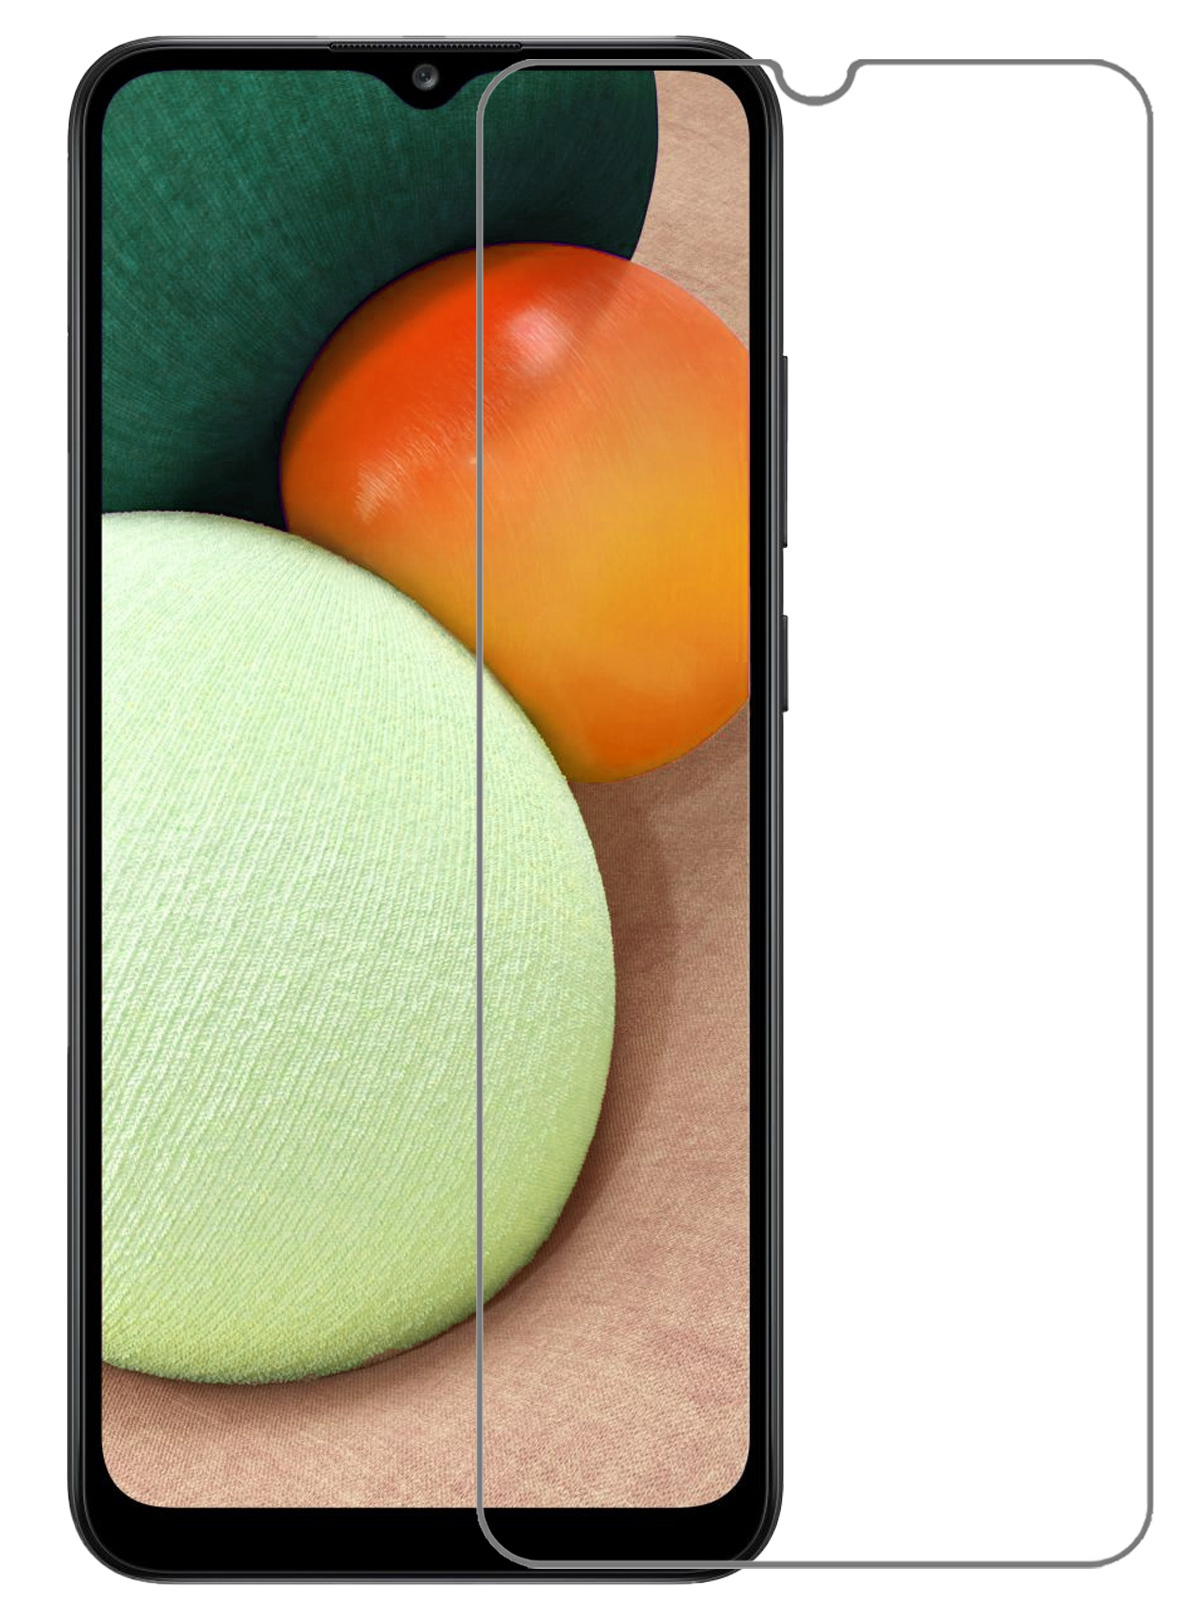 Nomfy Samsung Galaxy A02s Screenprotector Bescherm Glas - Samsung Galaxy A02s Screen Protector Tempered Glass